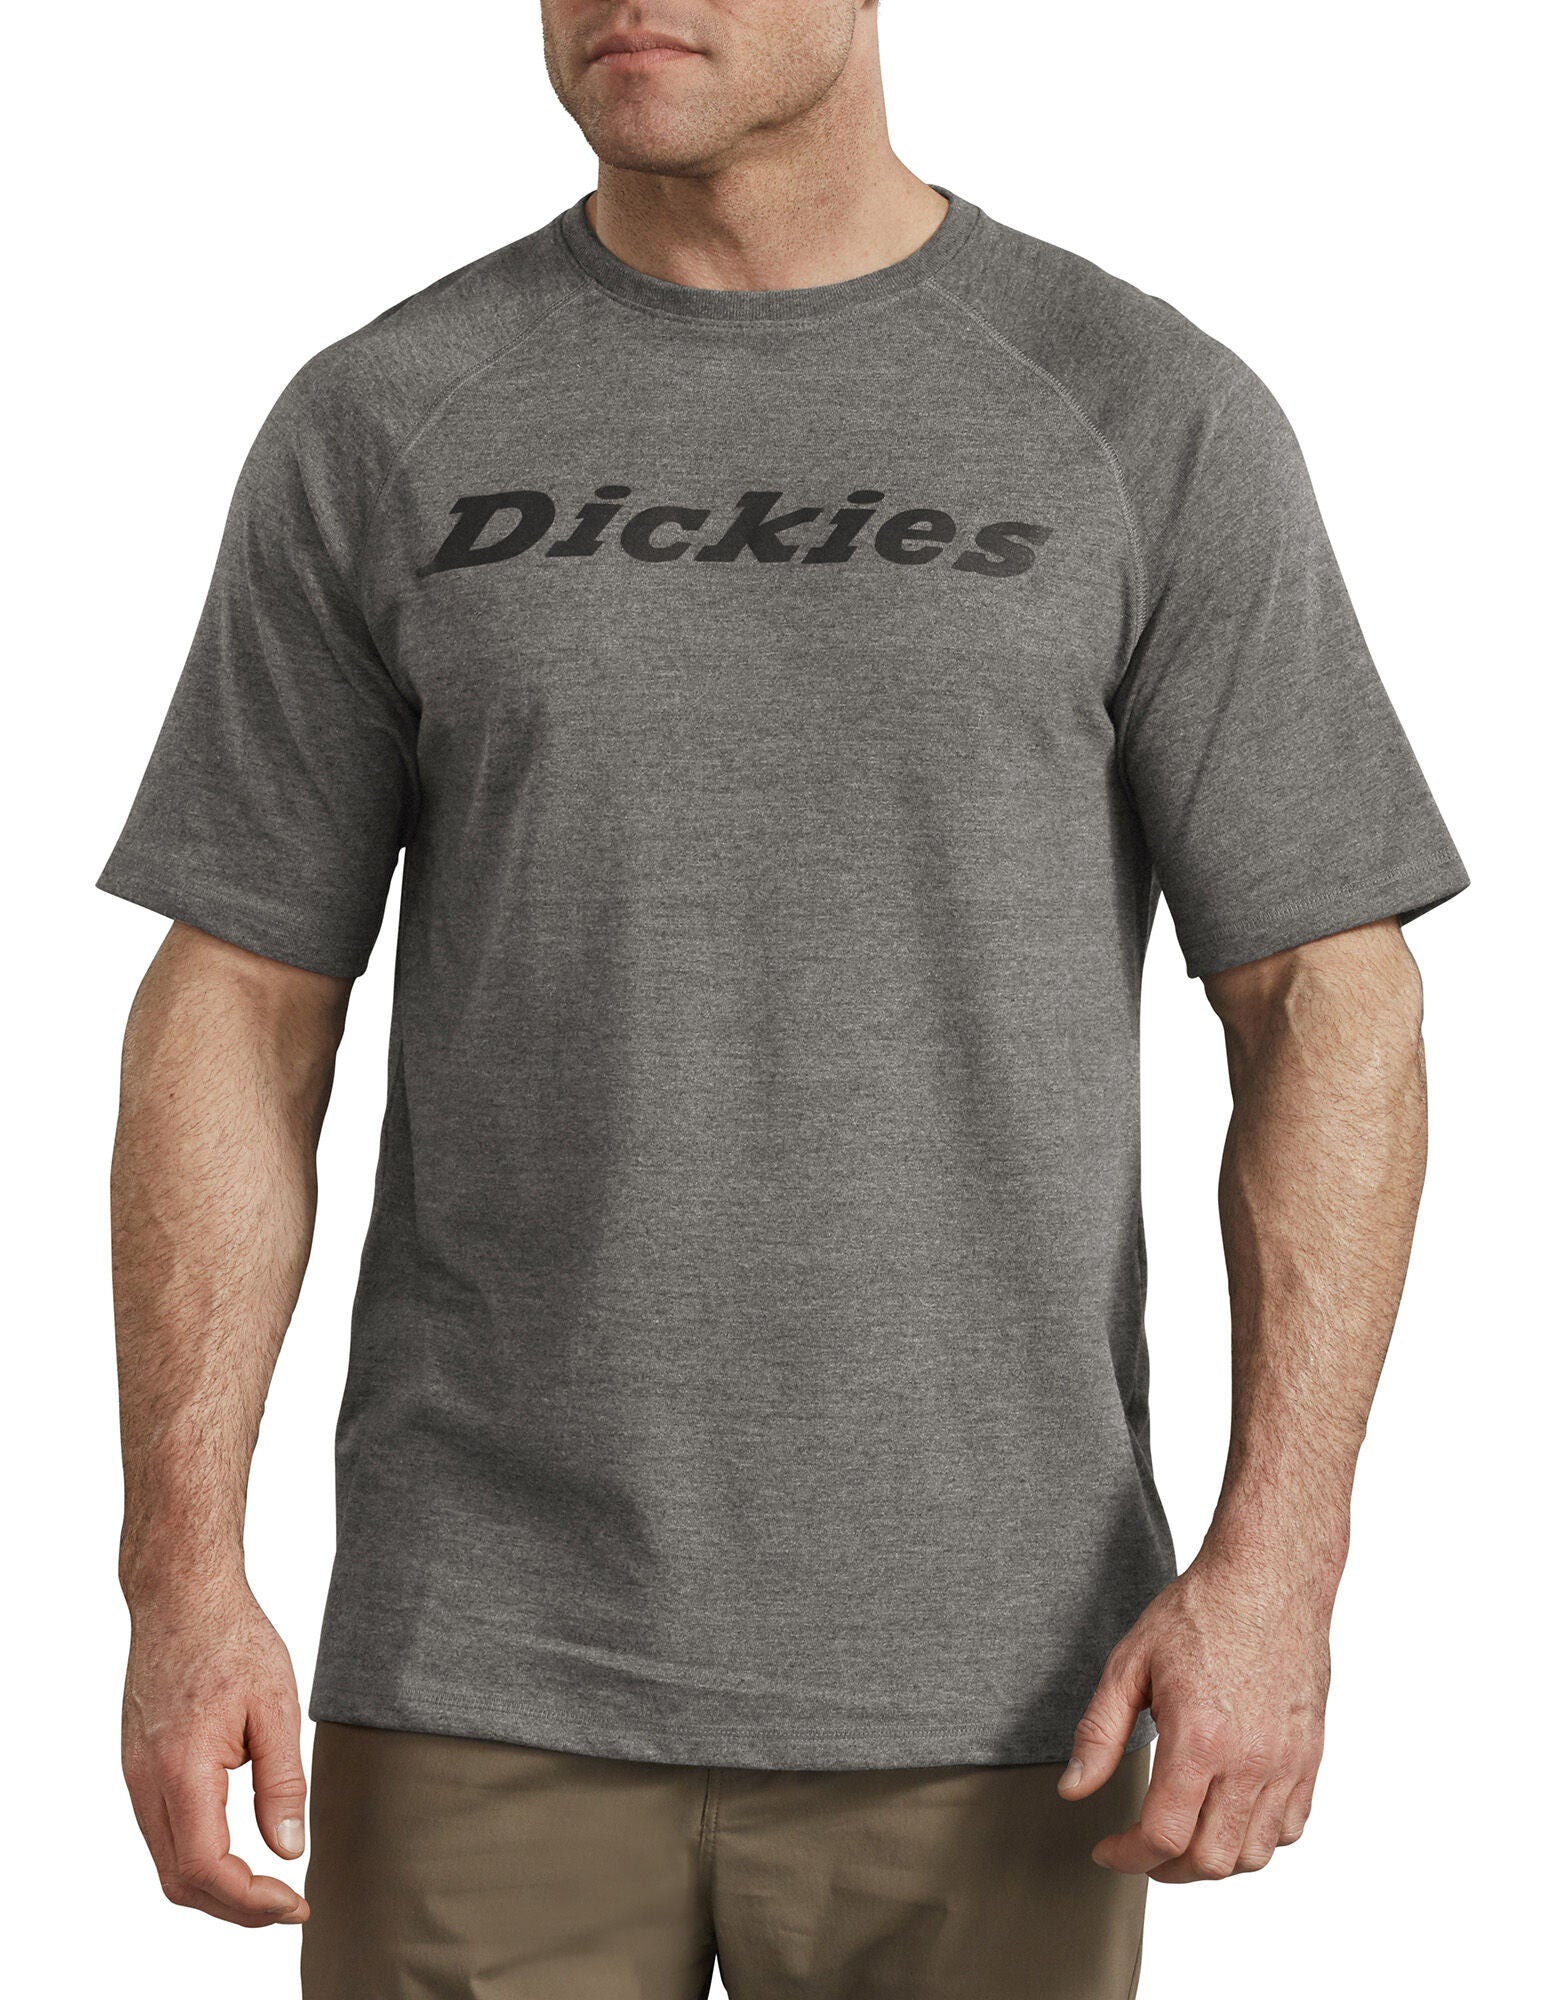 DIC-SS605 - Dickies Mens Temp-iQ Short Sleeve Graphic T-Shirt